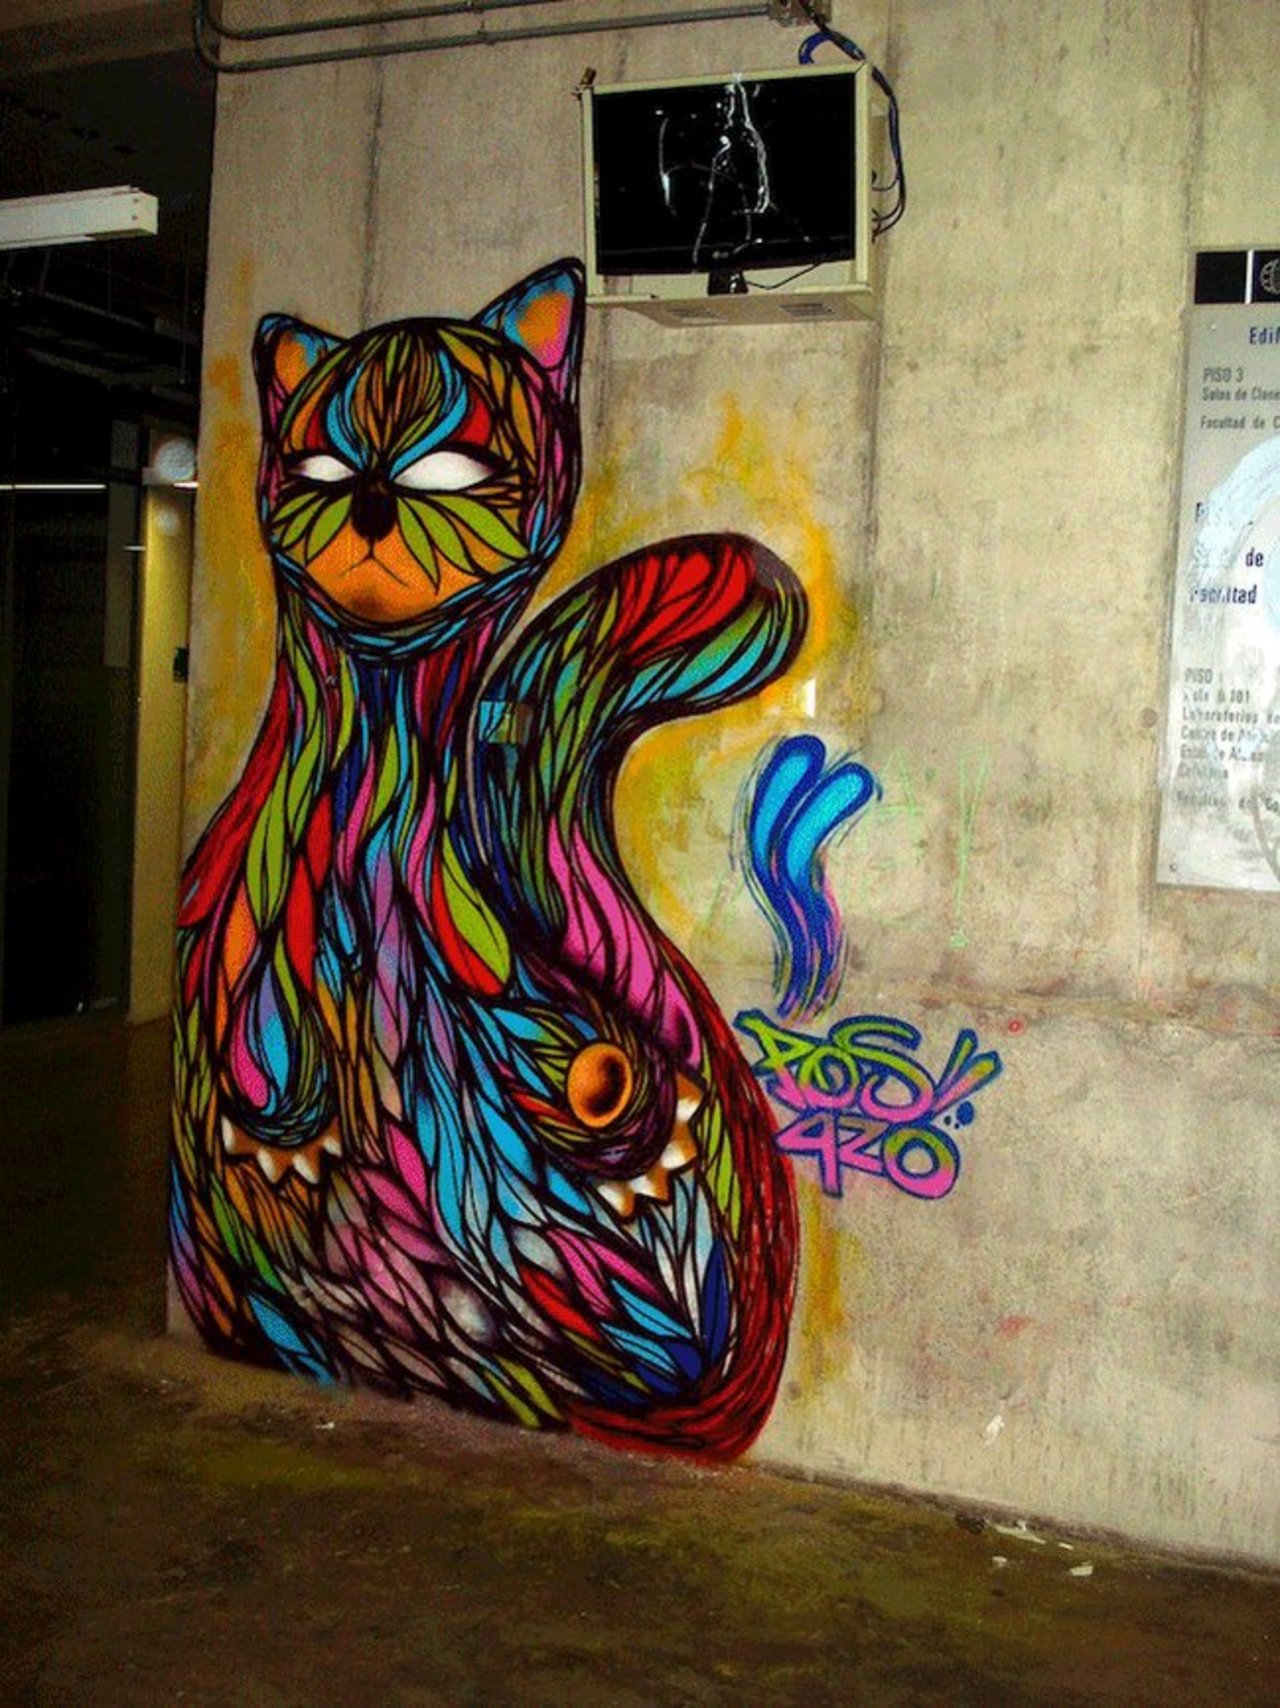 Art by POS 420. Pic by ?.#art #arts #streetart #graffiti #graffitiart #publicart #painting #gif #cat #trippy #colorful #modernart #contemporaryart #animalart #animal https://t.co/f8tOXOIa0X